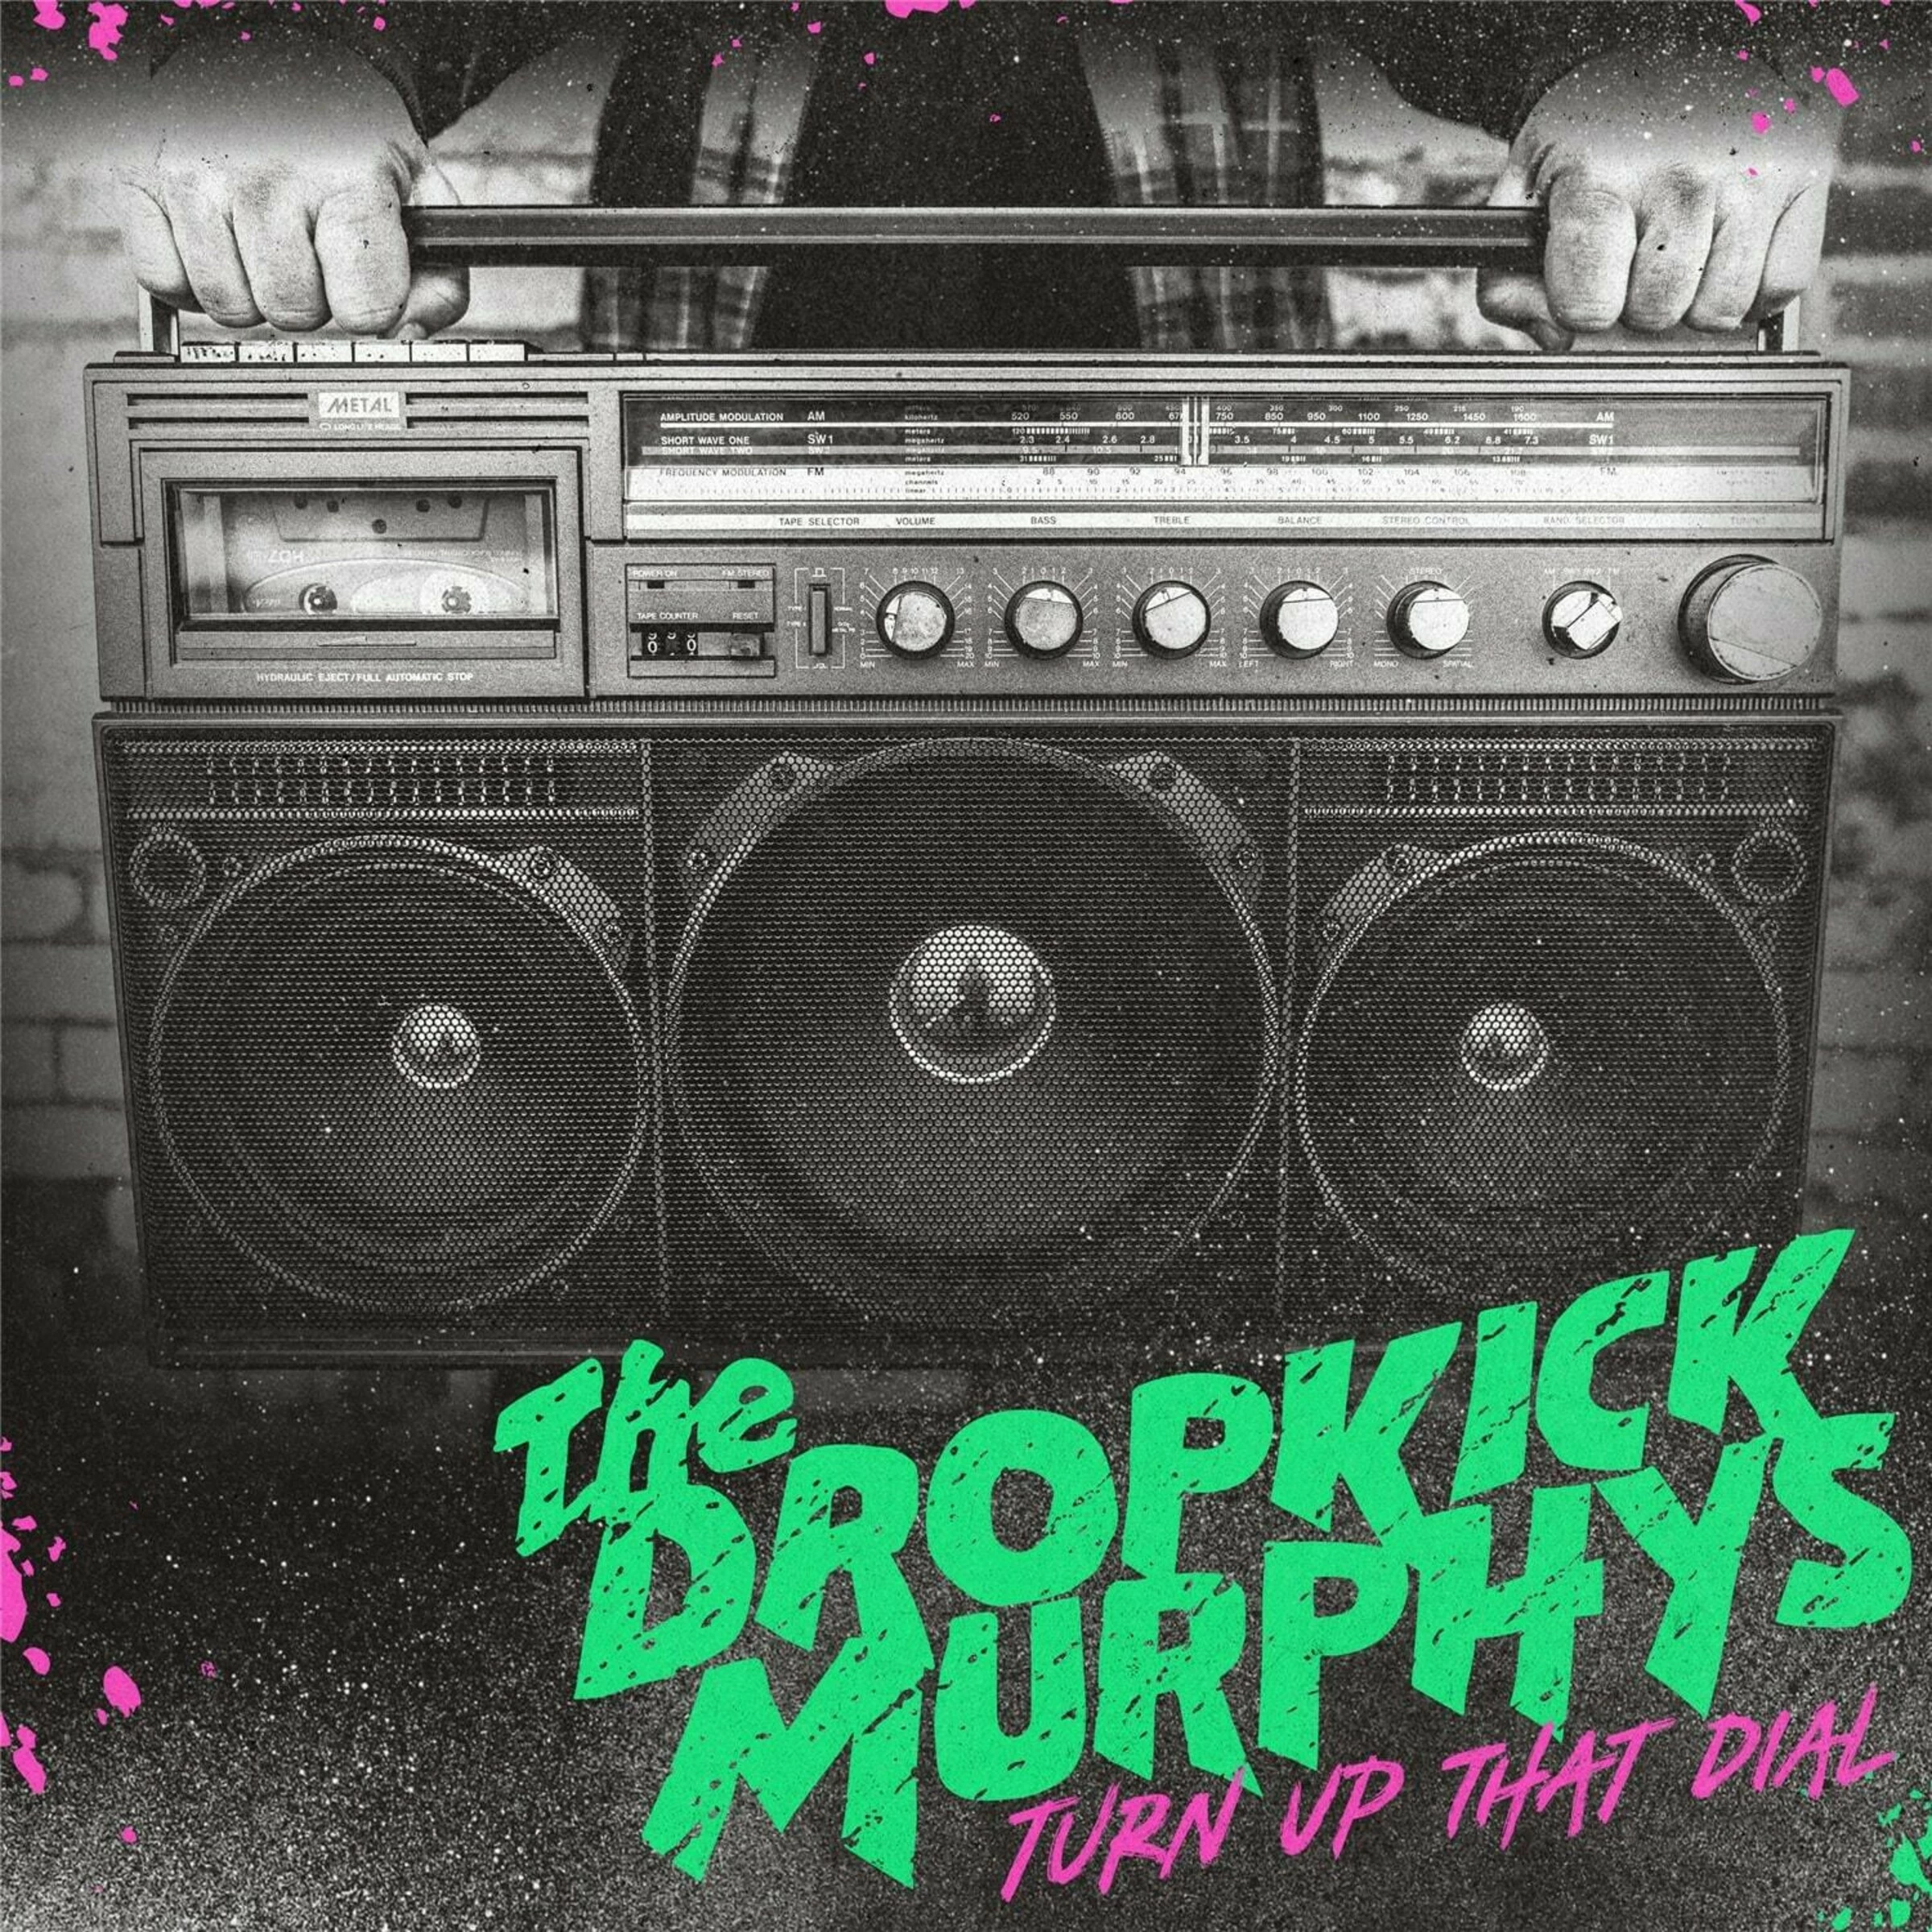 DROPKICK MURPHYS - Turn Up That Dial [BLACK LP]